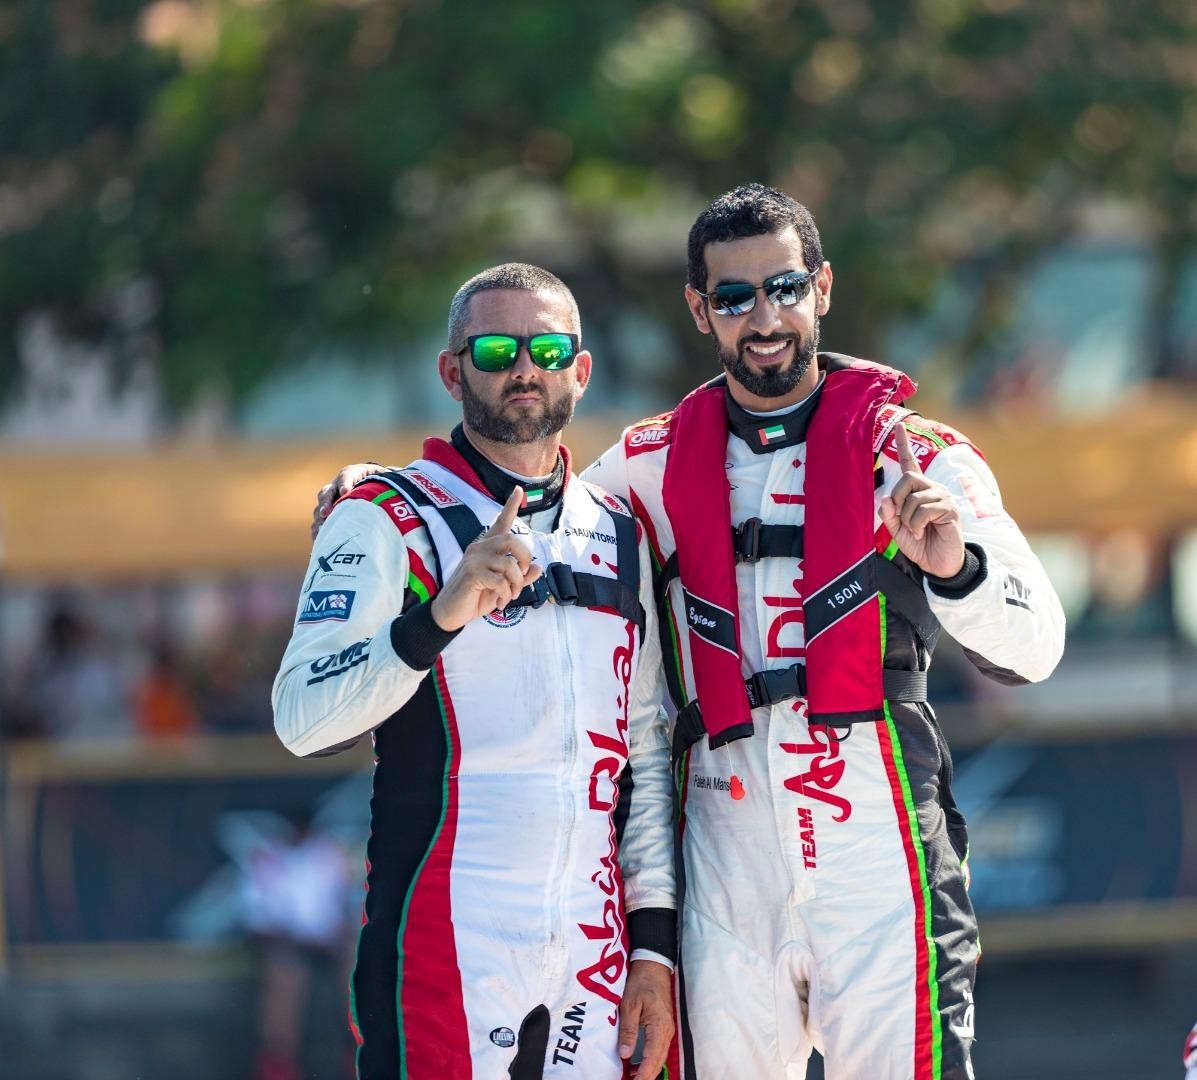 Abu Dhabi 4 vince ancora a Stresa, mentre si delineano i primi avversari